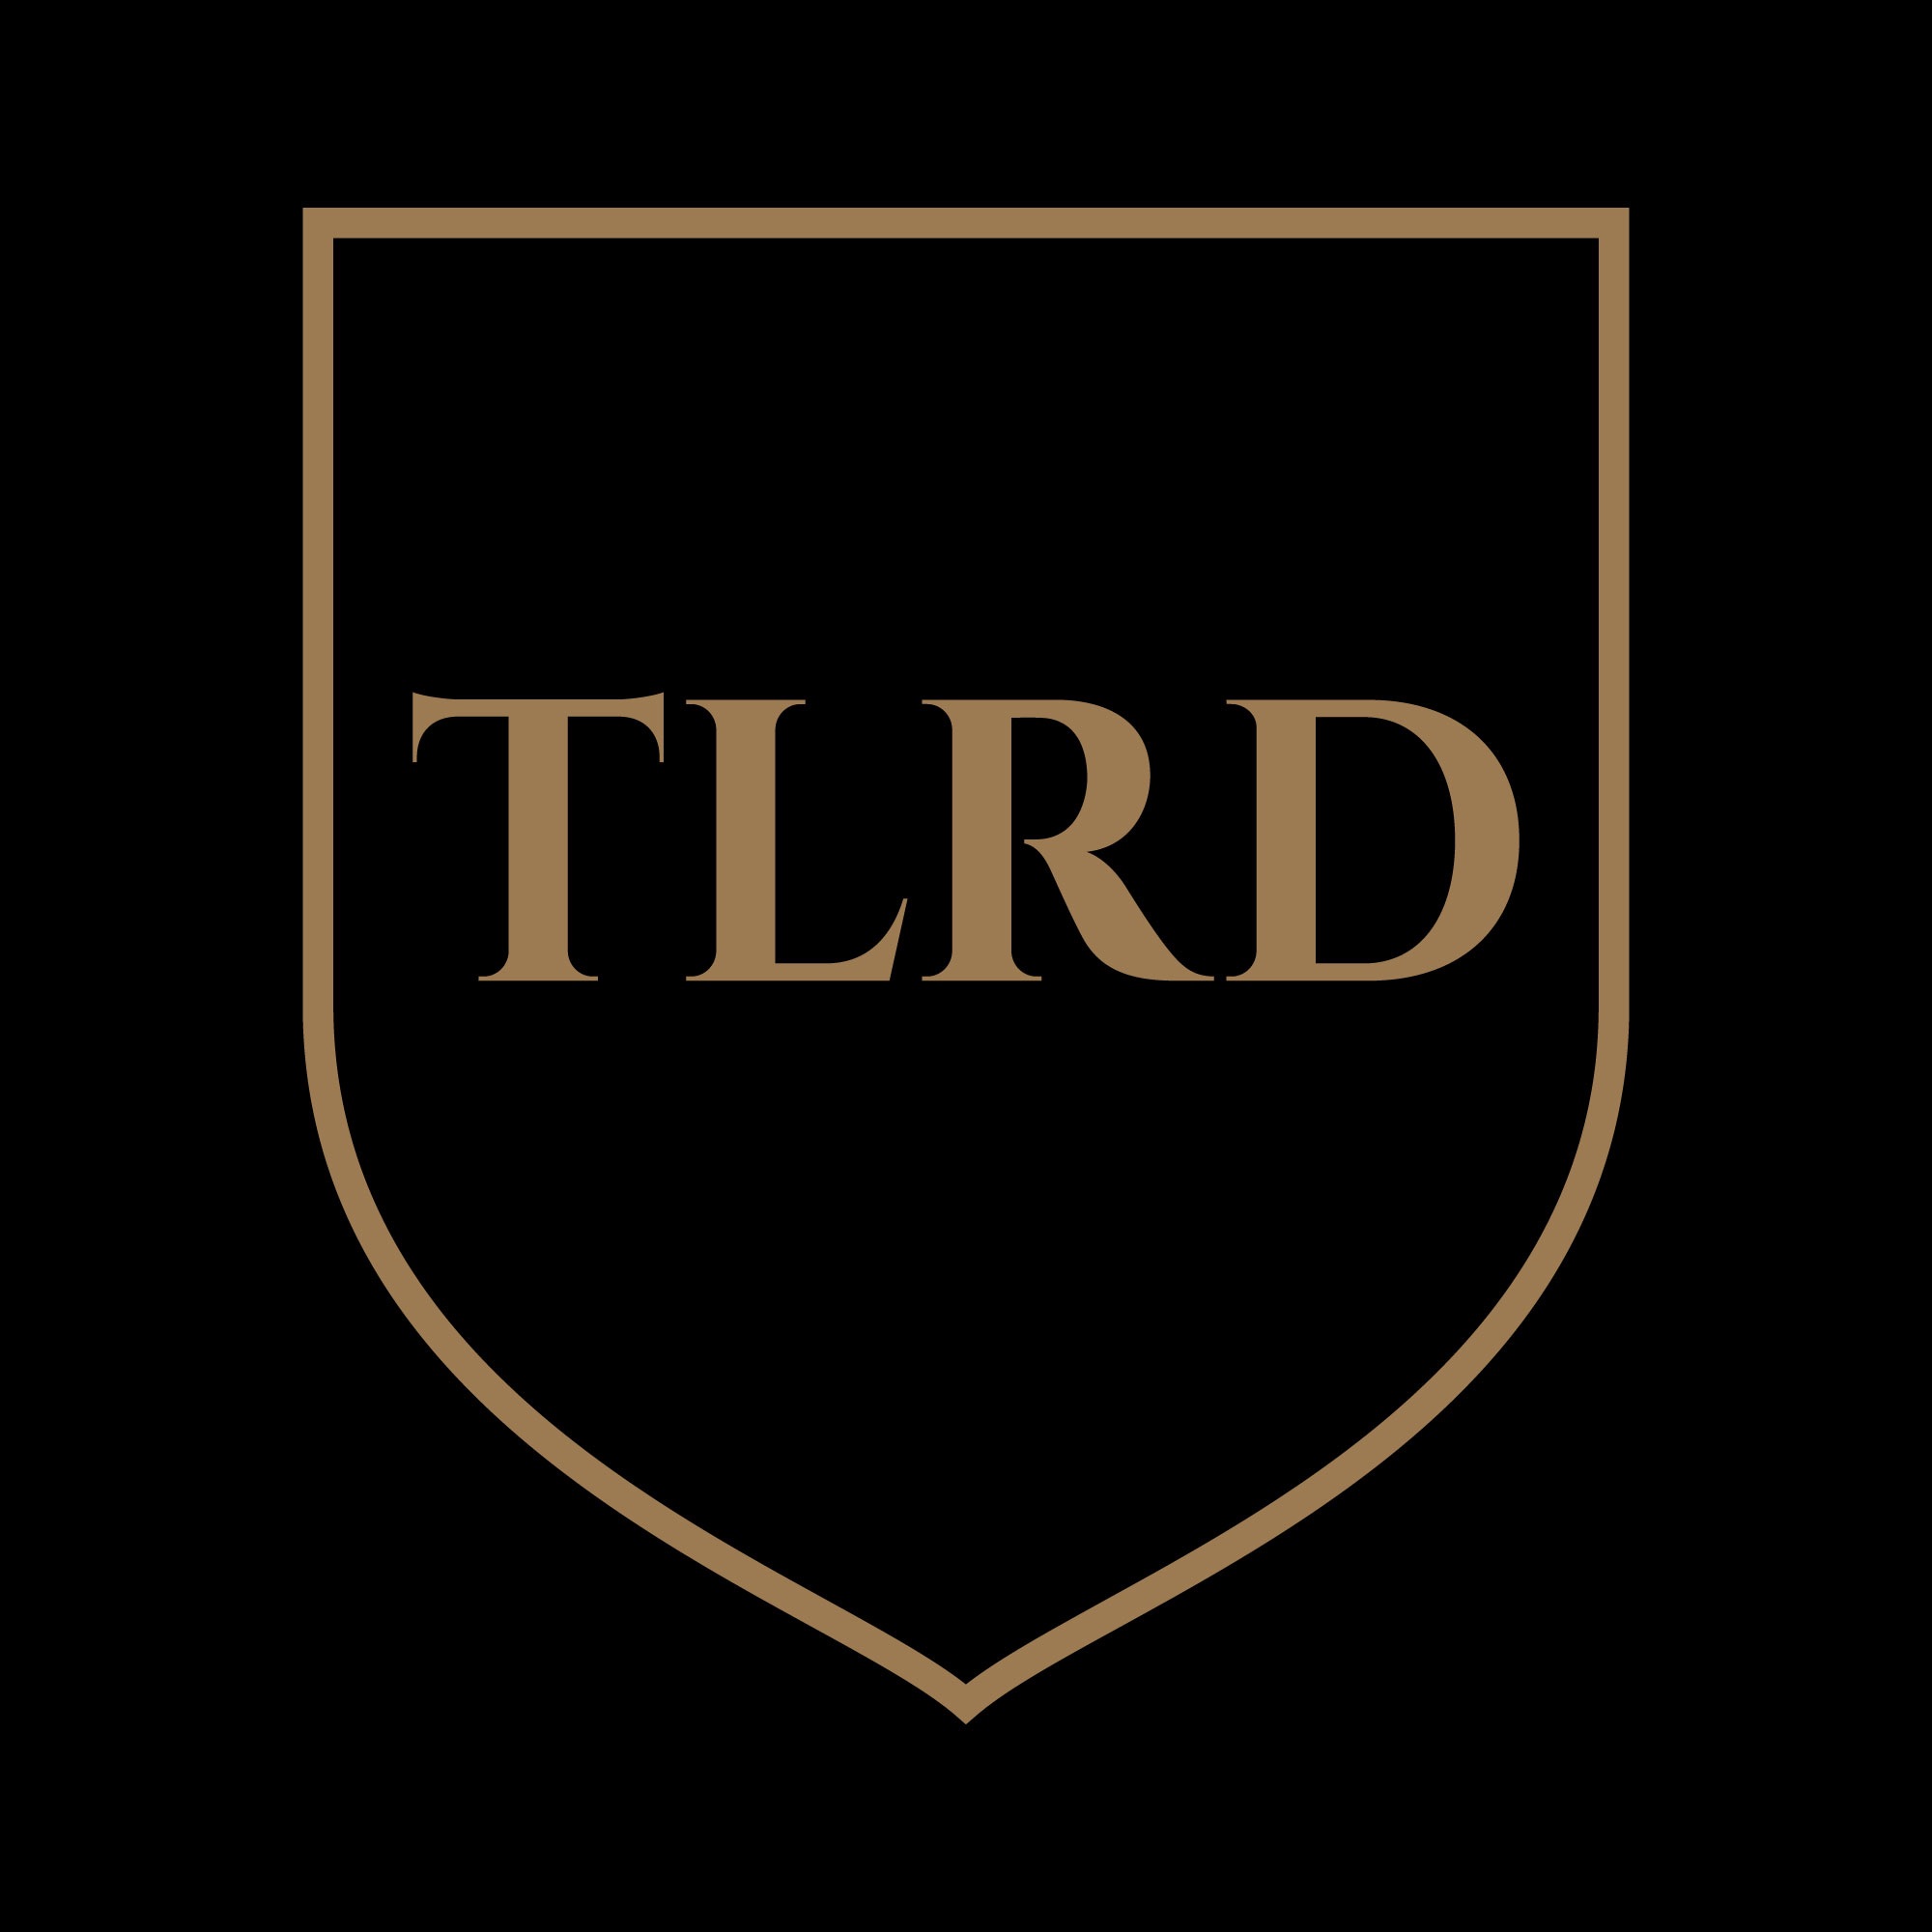 Tailored Security, LLC Logo